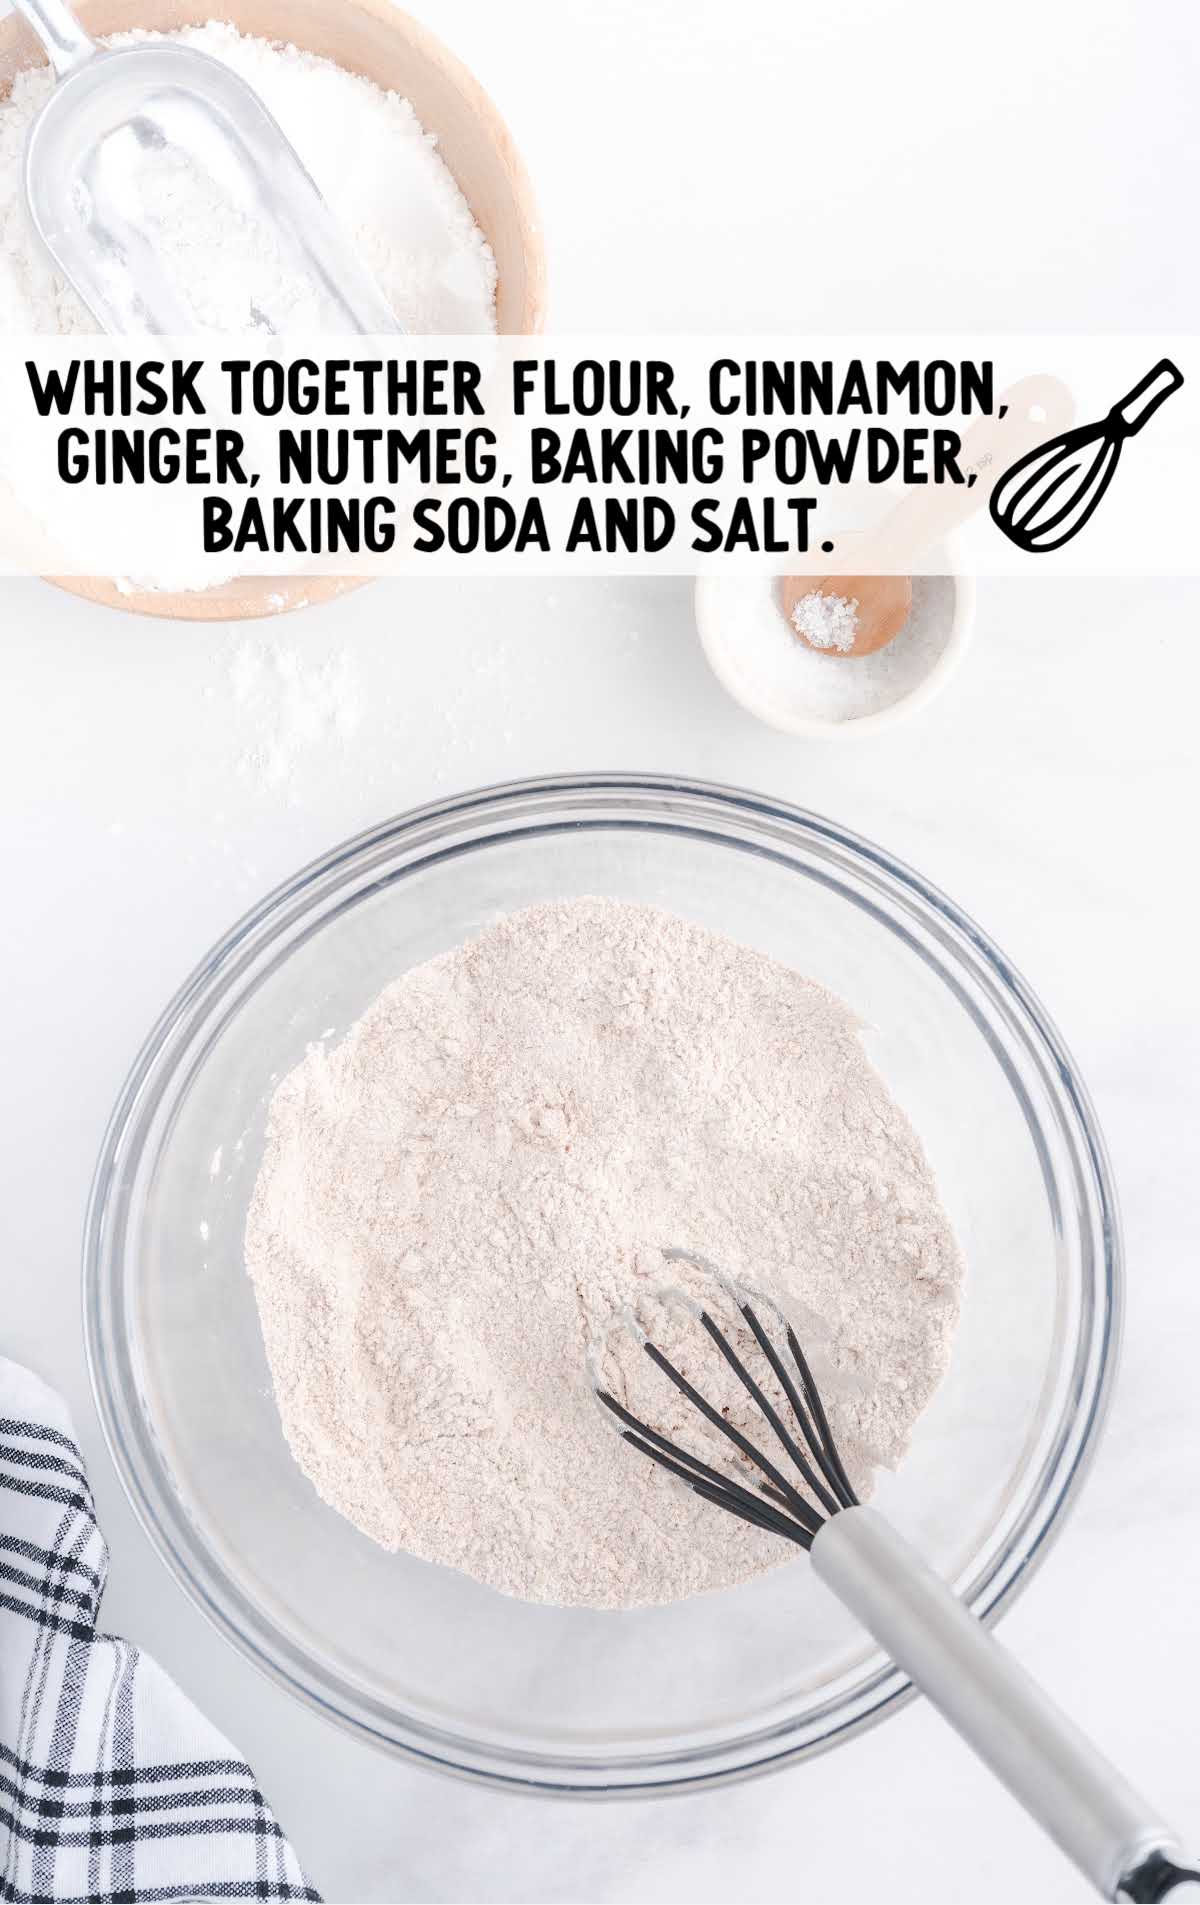 flour, cinnamon, ginger, nutmeg, baking powder, baking soda, and salt whisked together in a bowl